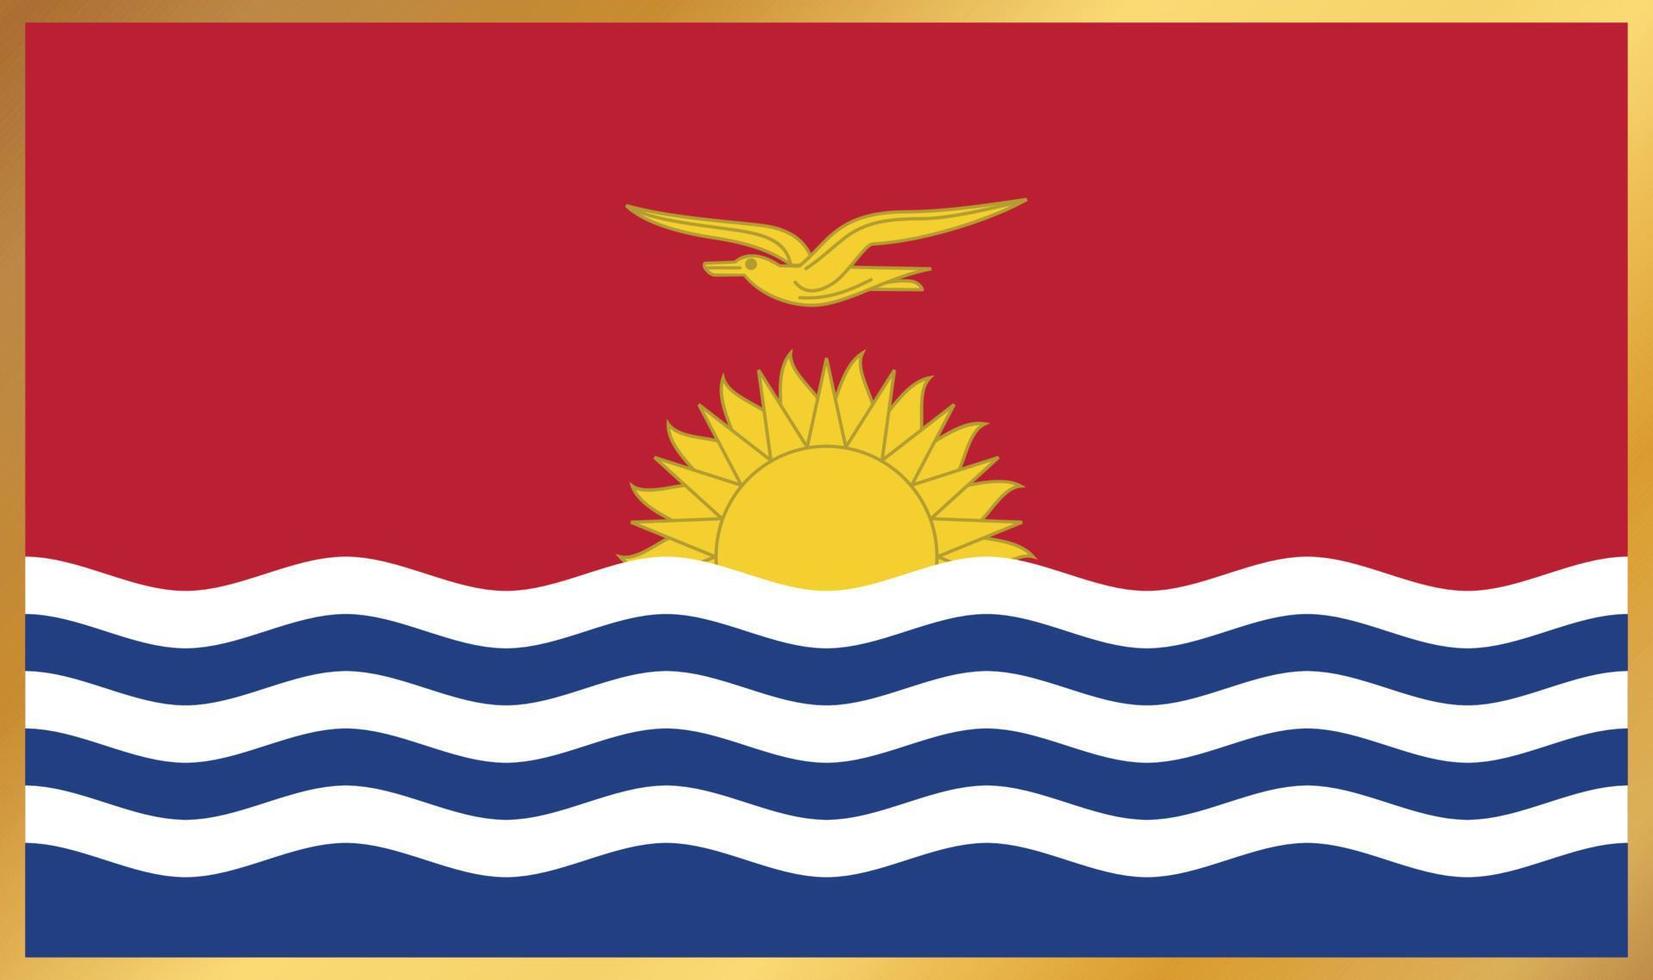 drapeau kiribati, illustration vectorielle vecteur